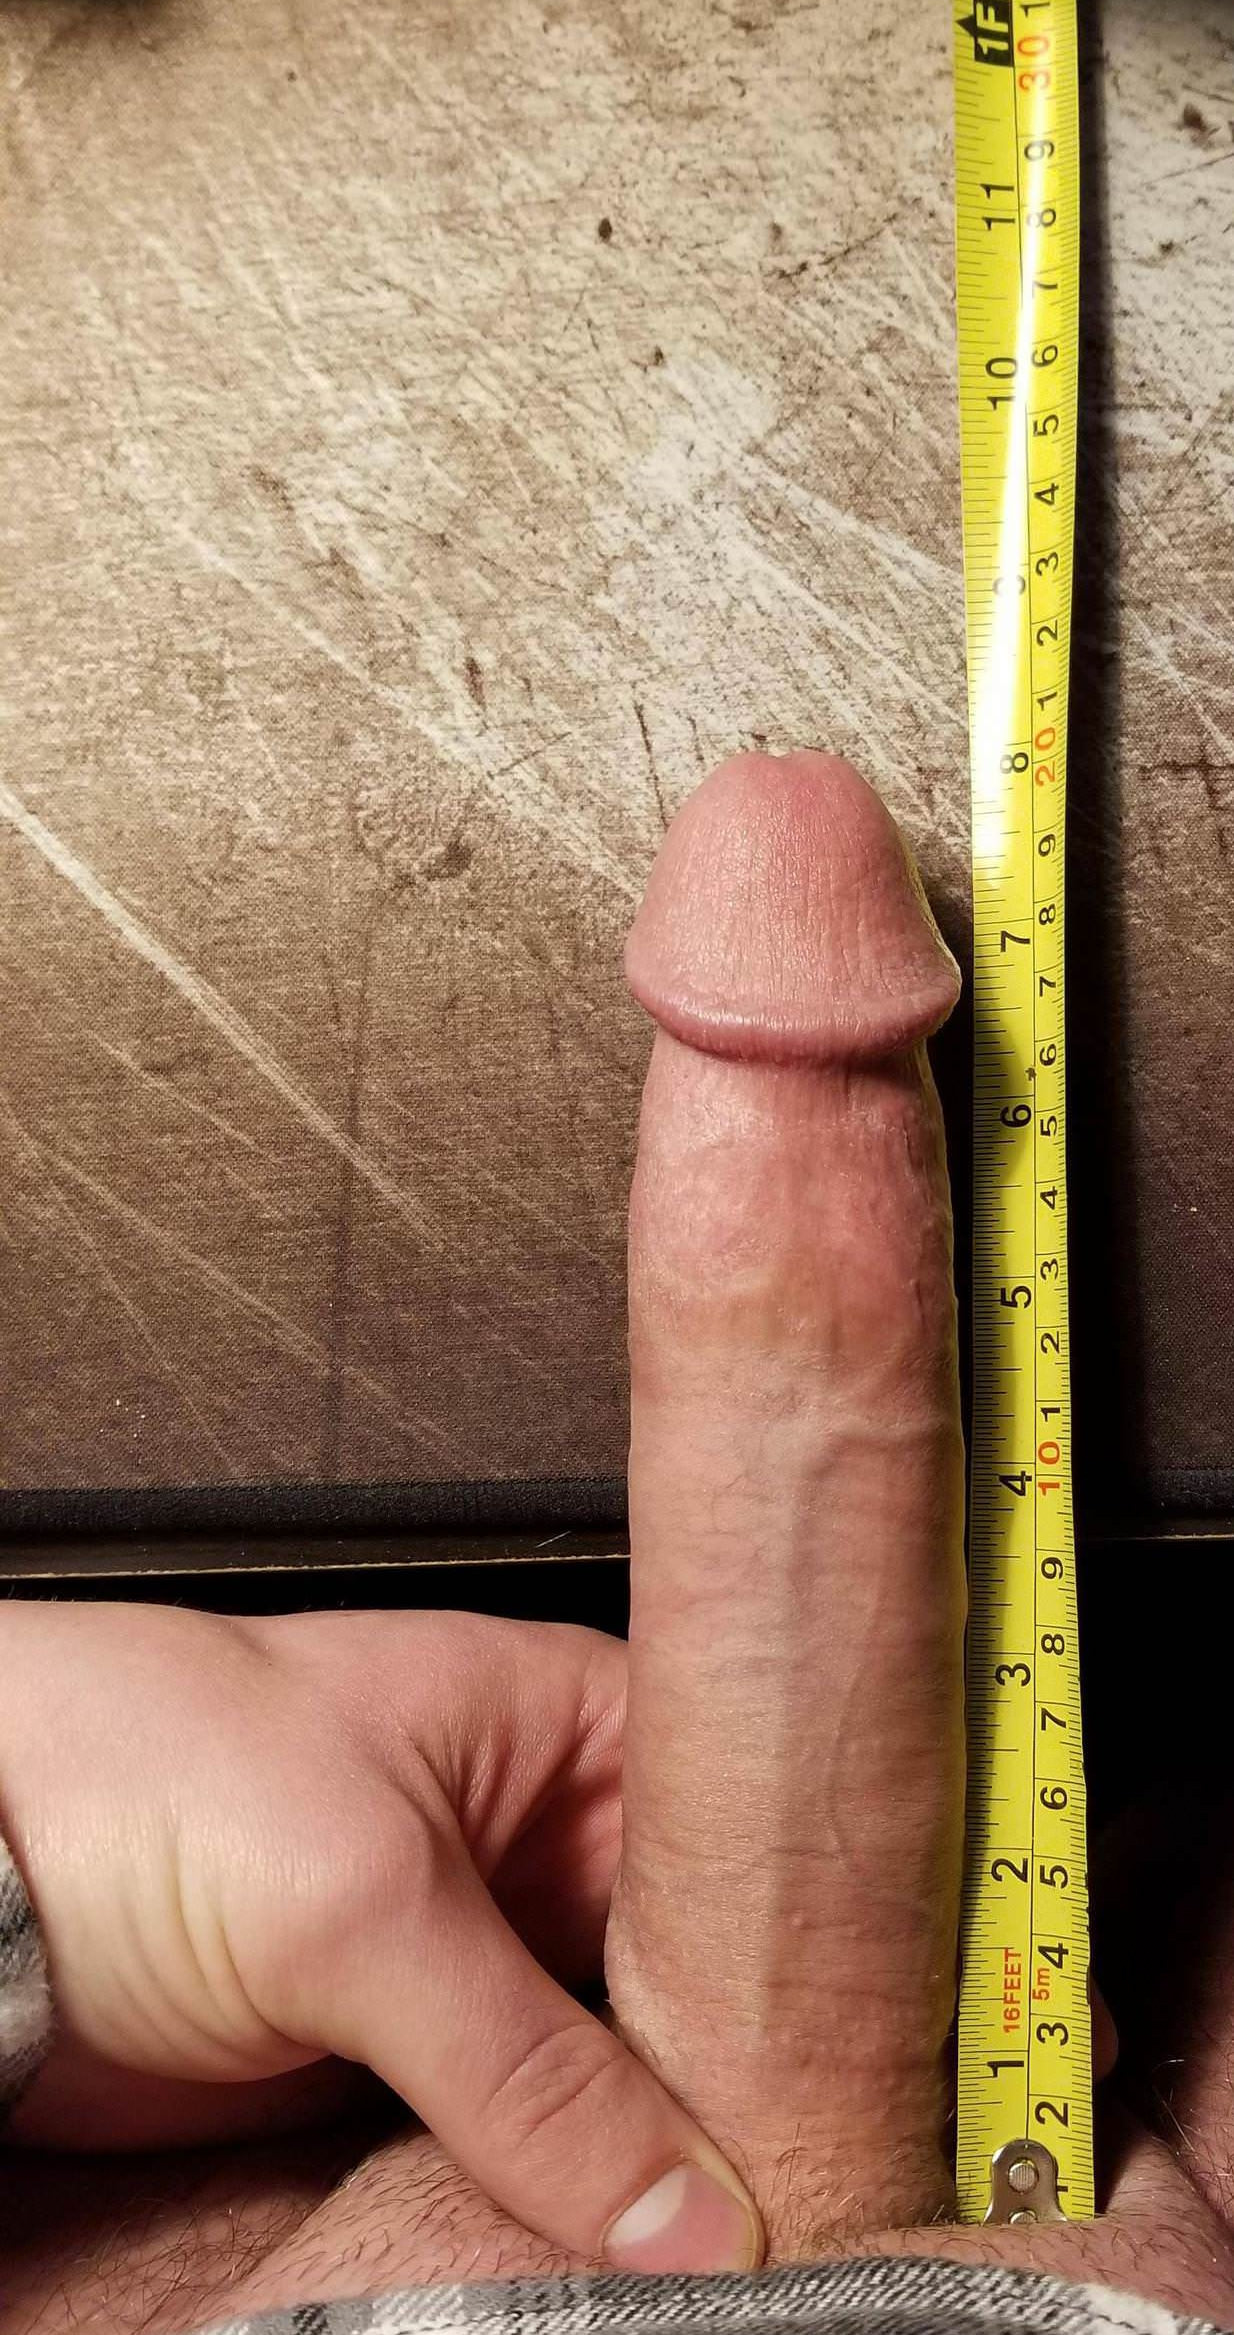 8 inch flaccid dick